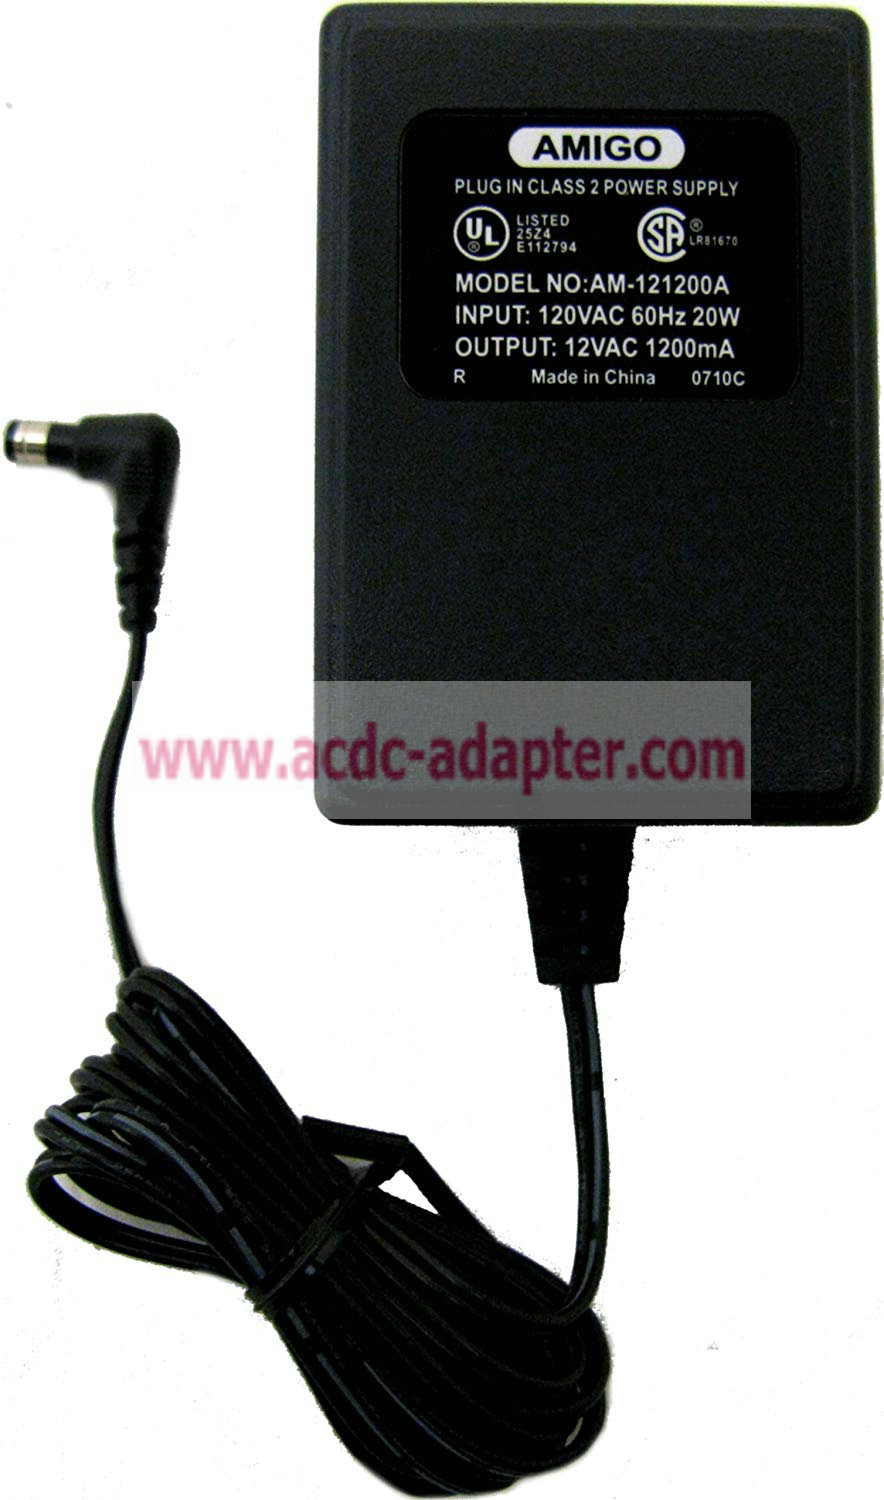 New Amigo AM-121200A 12VAC 1200MA AC Adapter Plug-in Class 2 Power supply - Click Image to Close